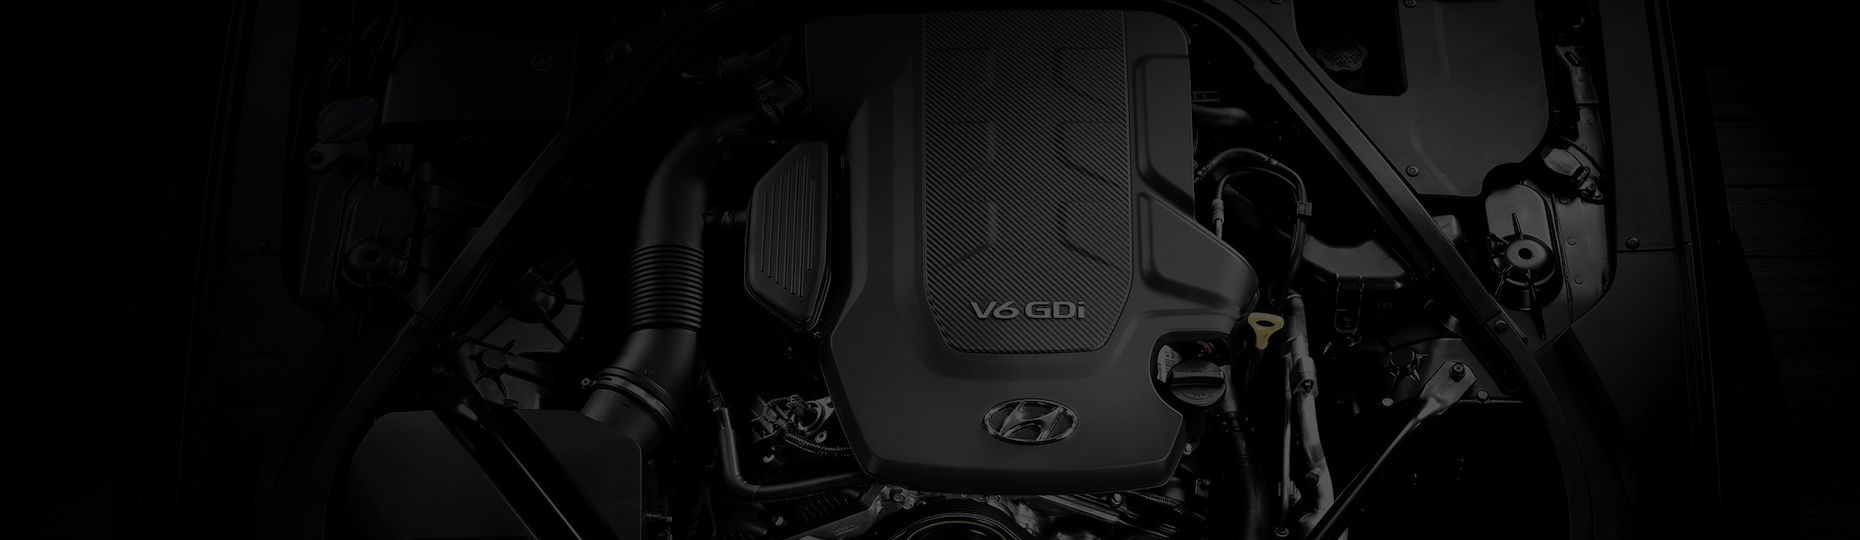 Close view of V6 GDi engine